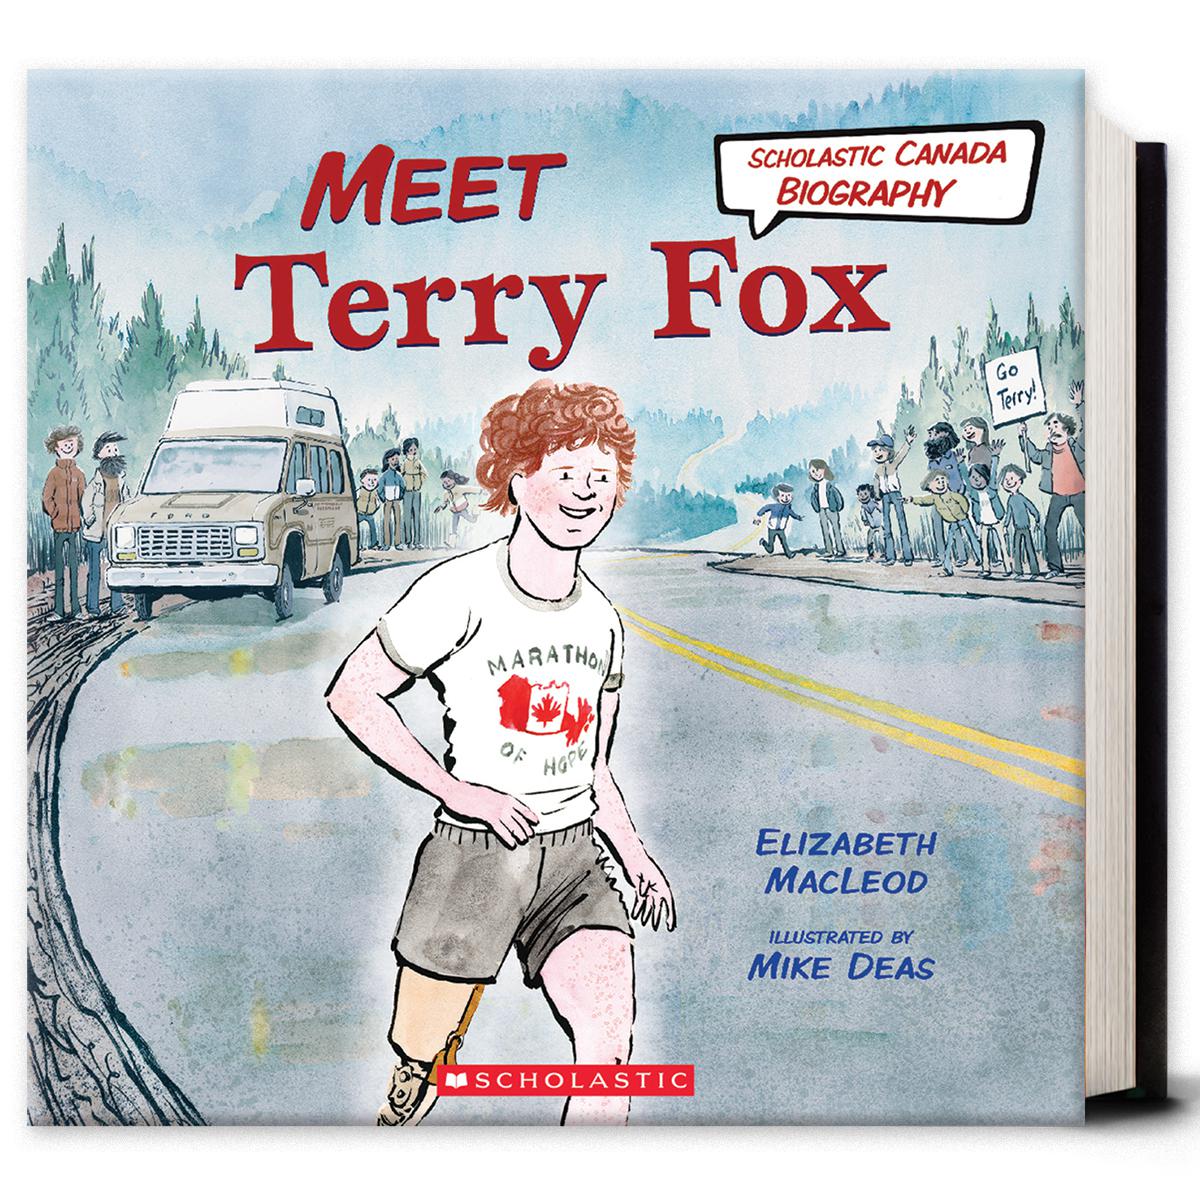  Scholastic Canada Biography: Meet Terry Fox 